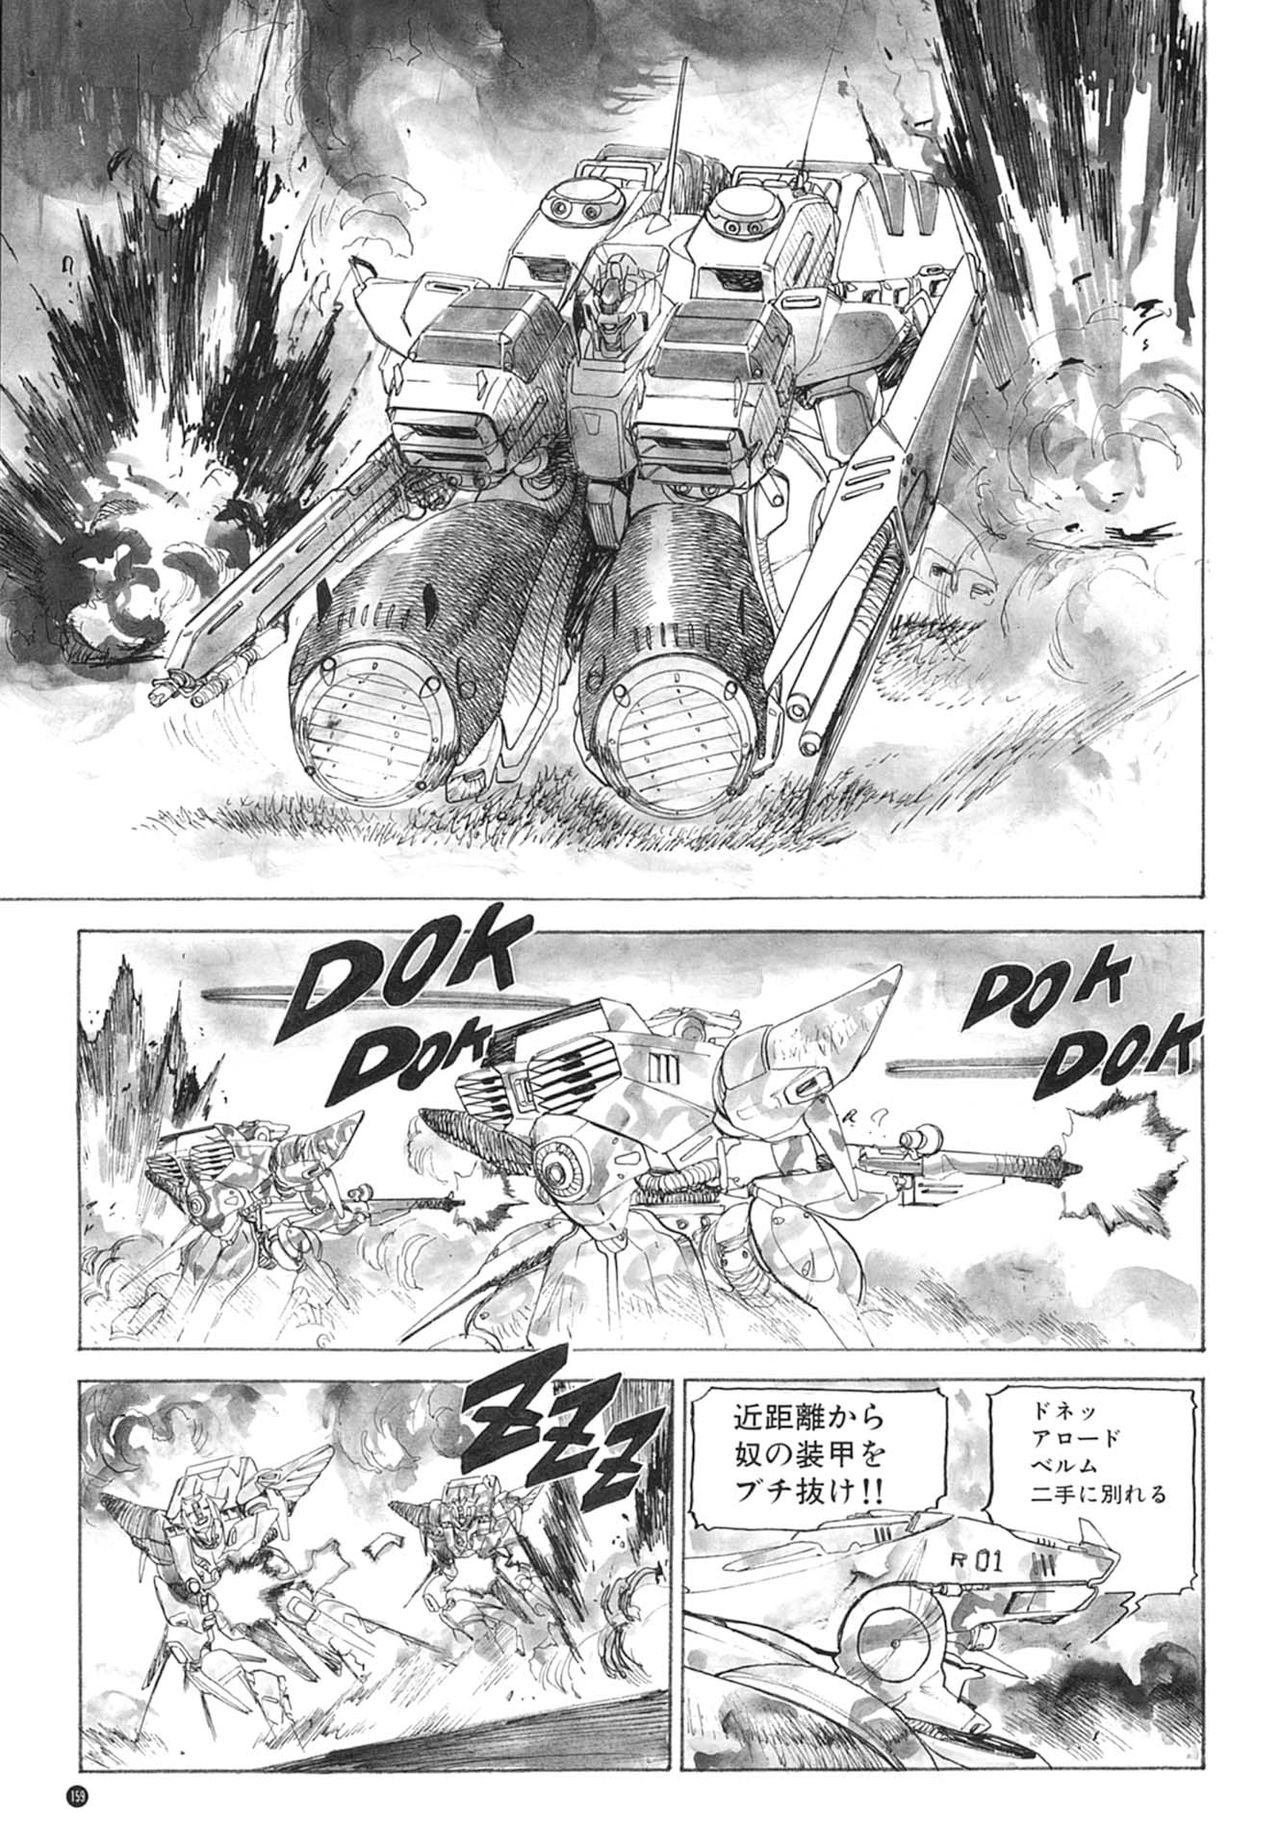 [Kazuhisa Kondo] Kazuhisa Kondo 2D & 3D Works - Go Ahead - From Mobile Suit Gundam to Original Mechanism 158